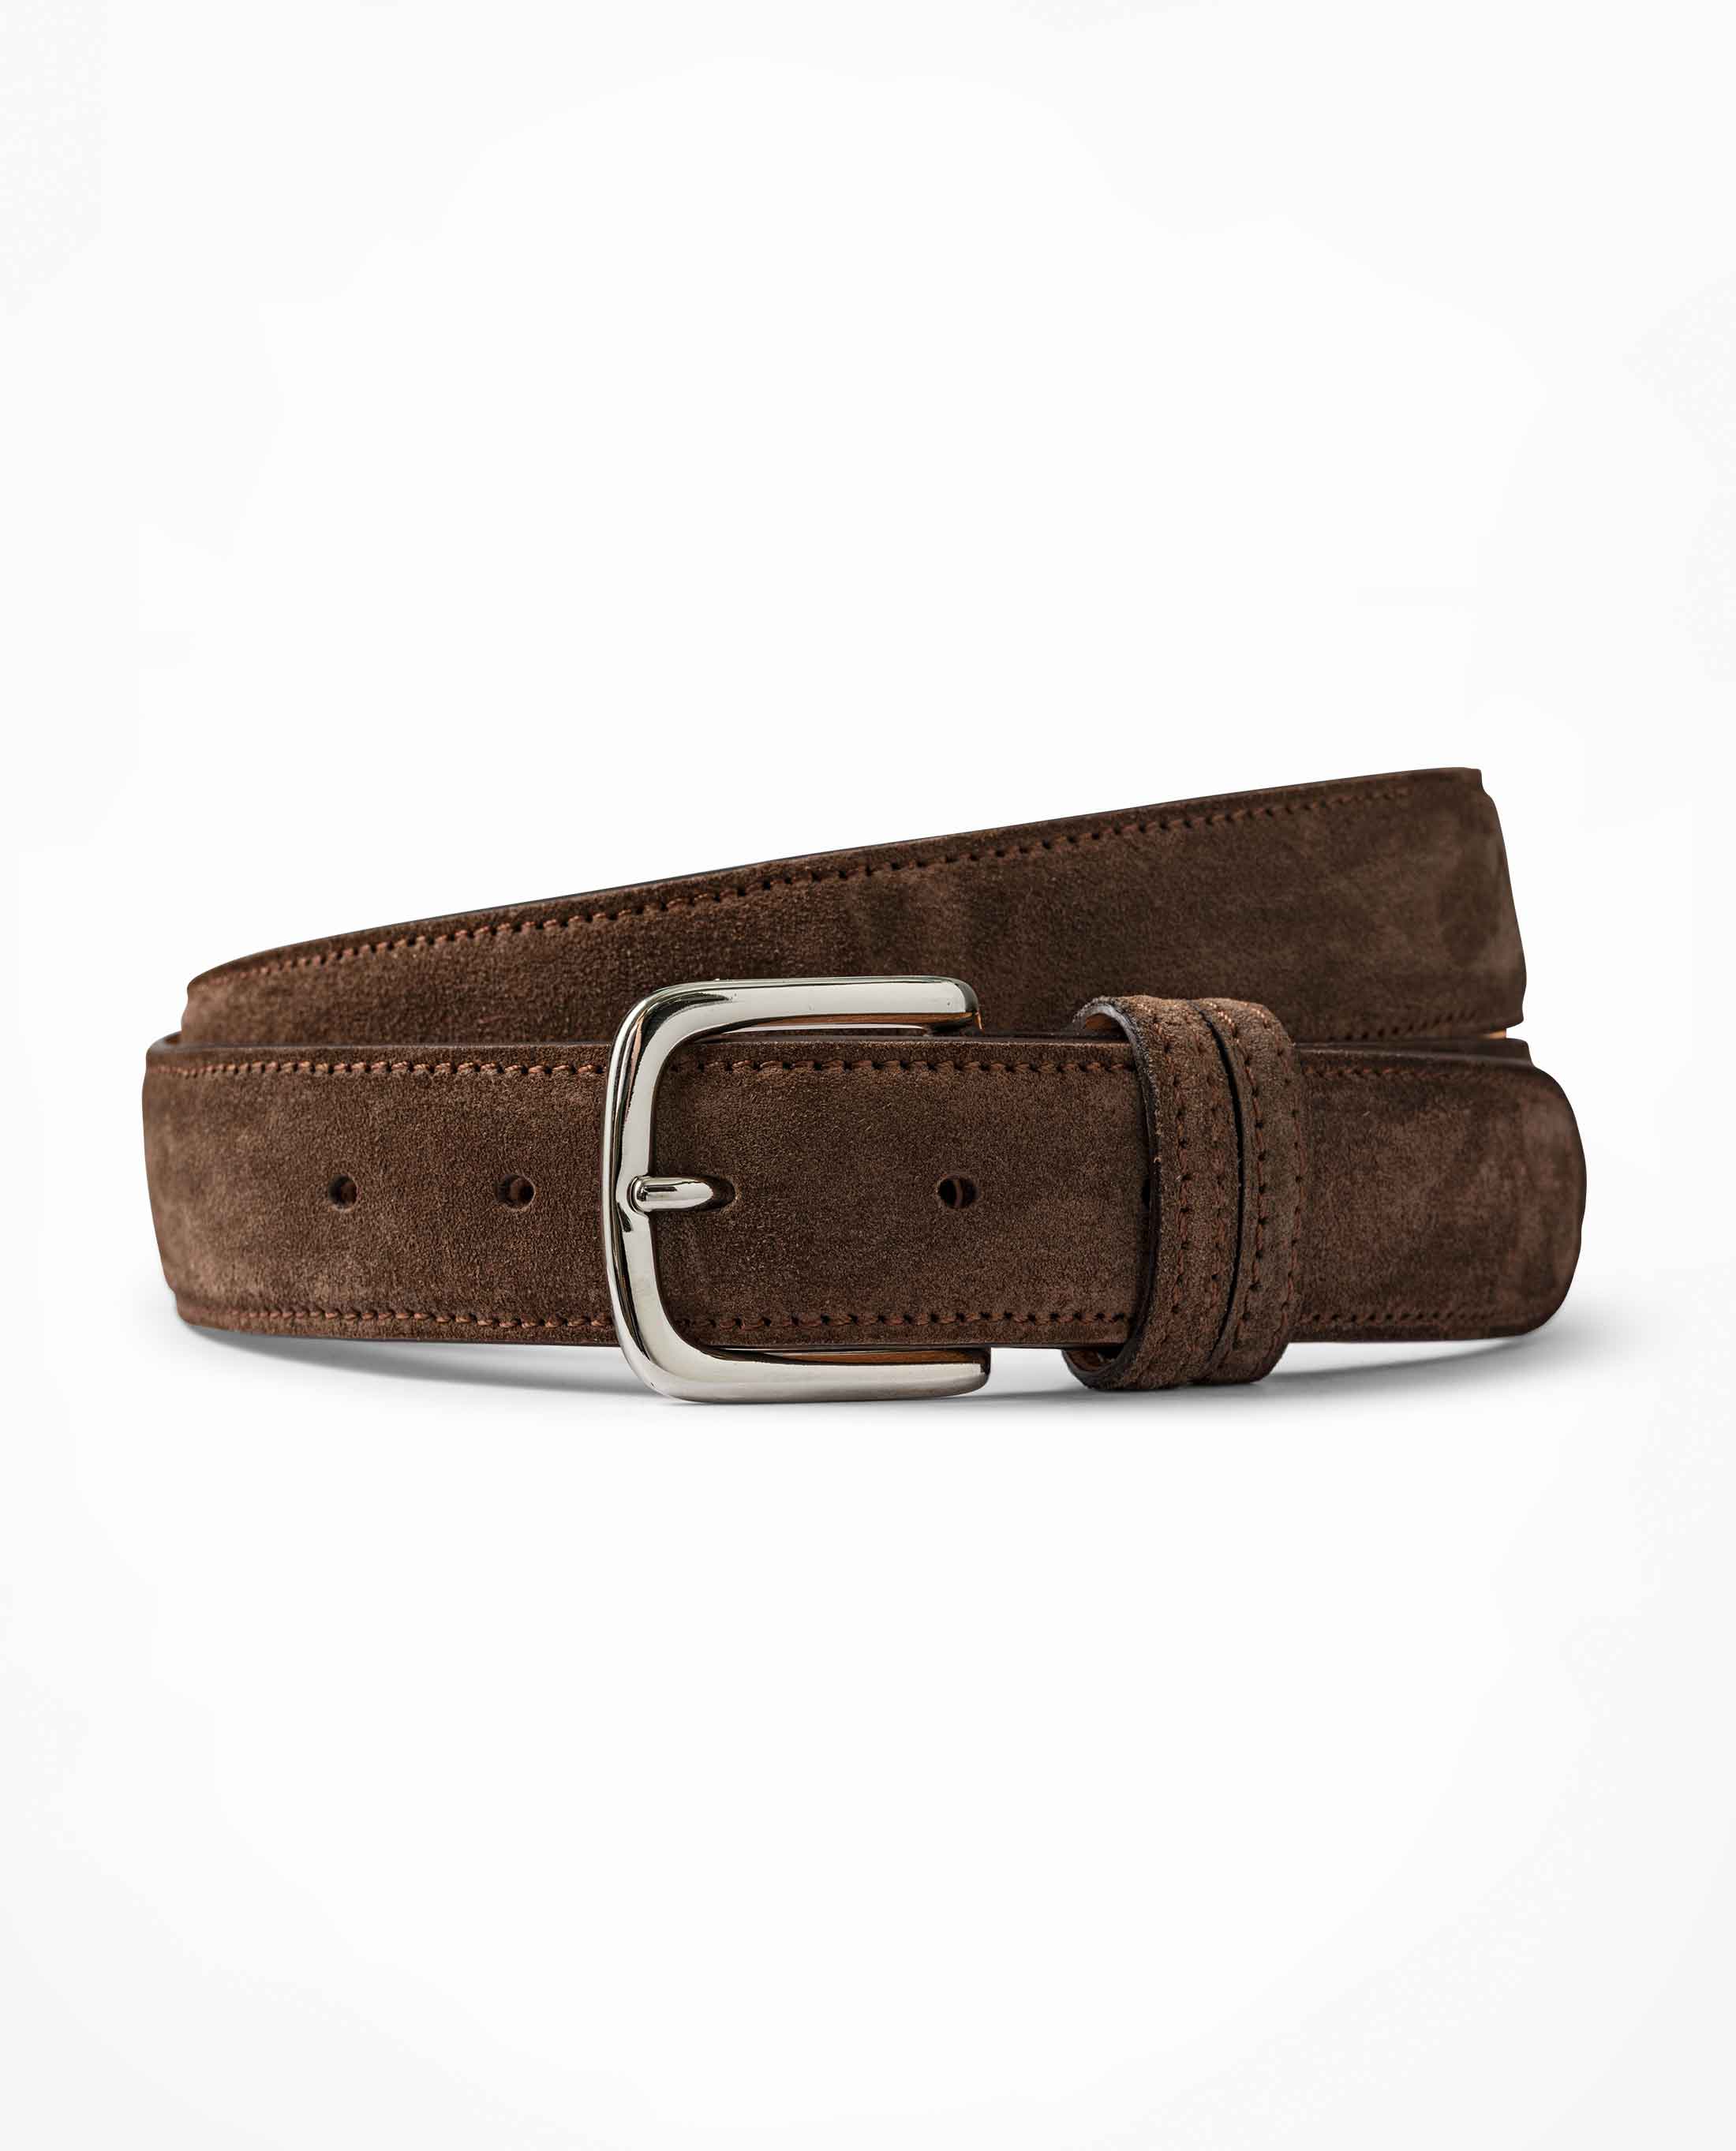 Chocolate-Brown-Suede-Belt-LIS03-custom-belts-90ff60f63a3e42008090a72d0798e0a3